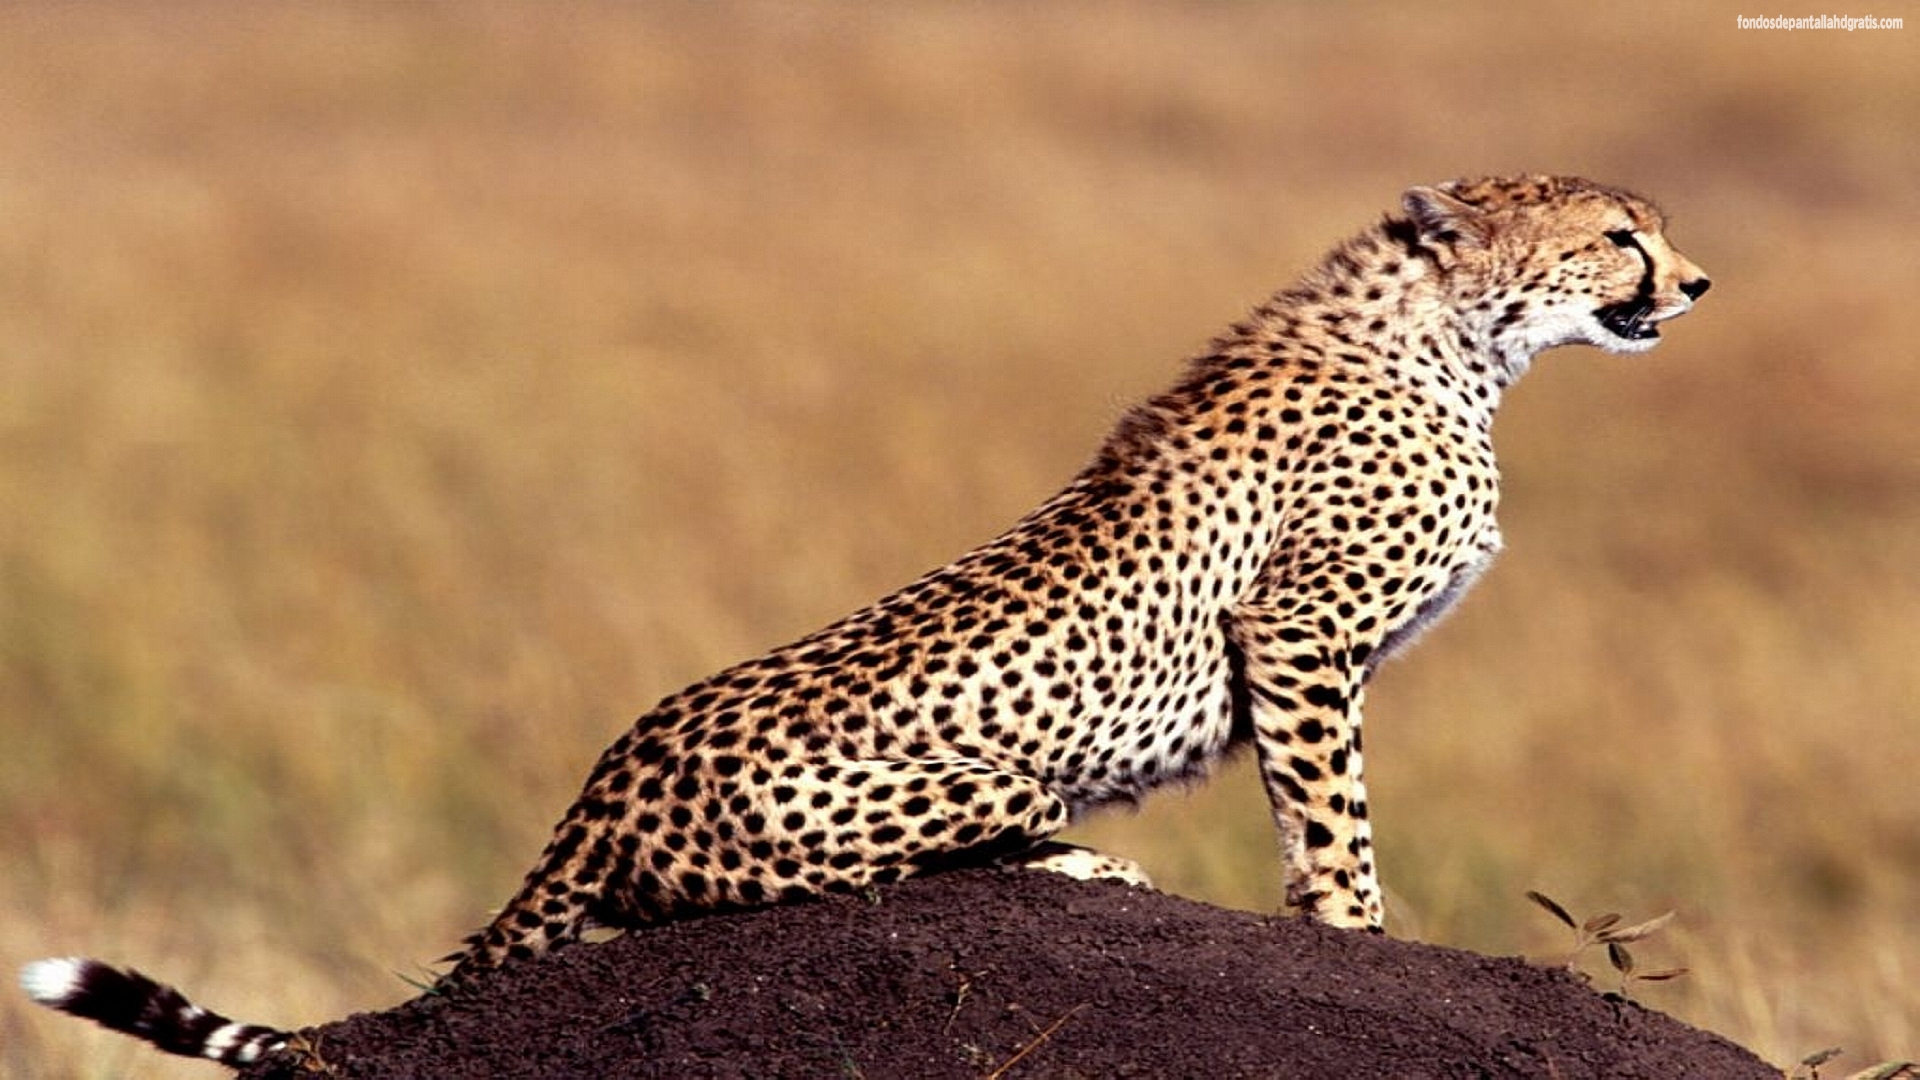 Descargar imagen cheetah exotic animal hd widescreen Gratis 10156 1920x1080